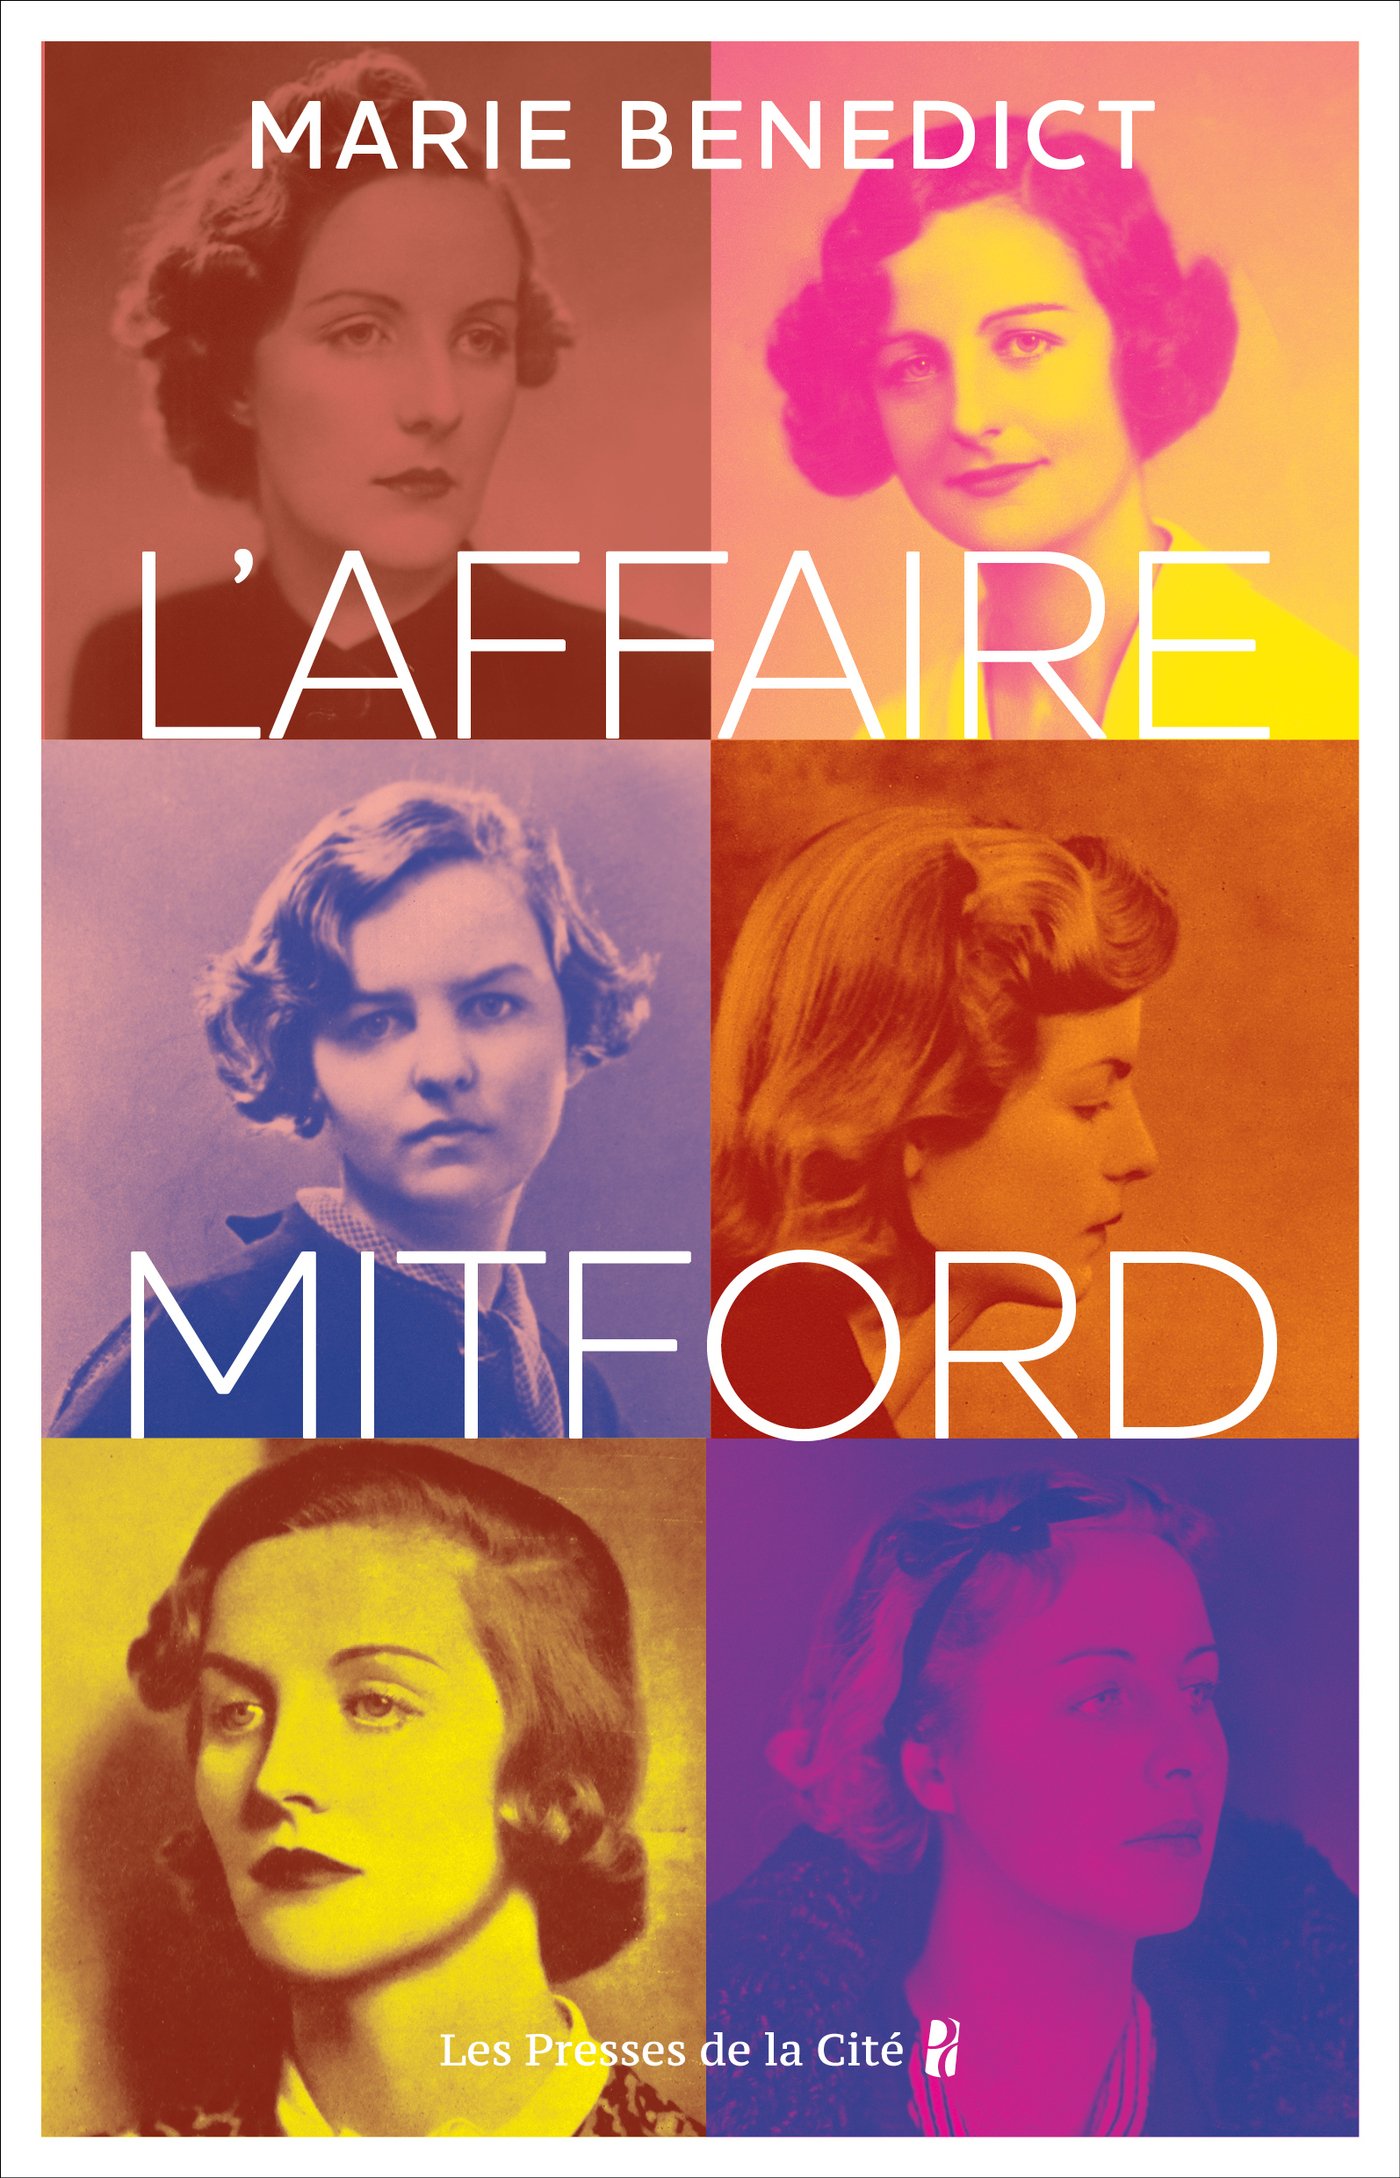 Afficher "L'Affaire Mitford"